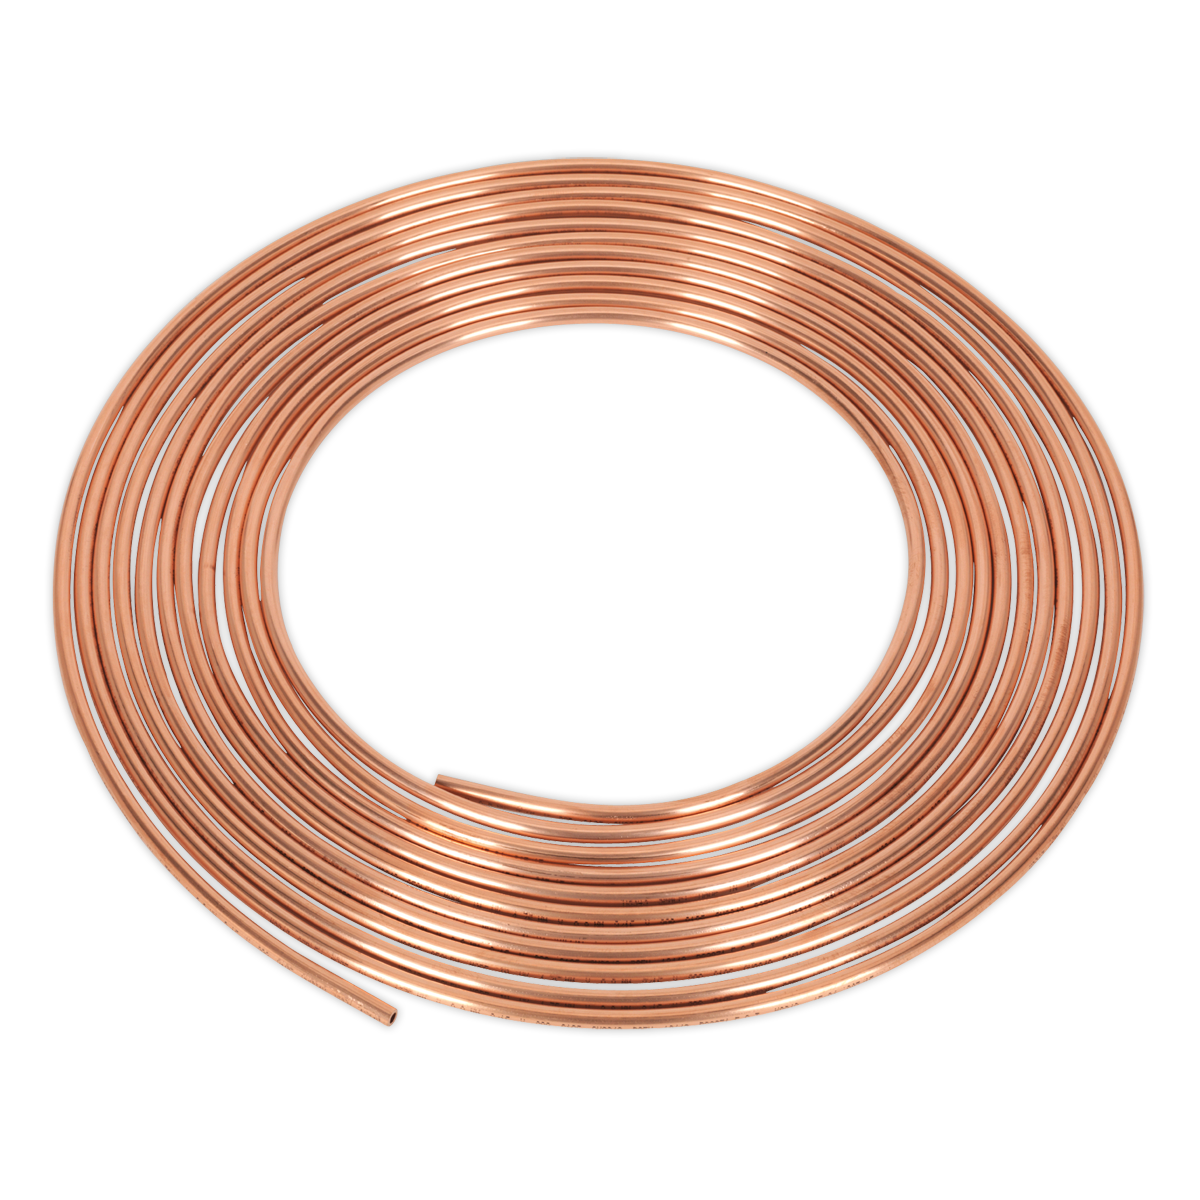 Brake Pipe Copper Tubing 22 Gauge 3/16" x 25ft BS EN 12449 C106 - CBP002 - Farming Parts